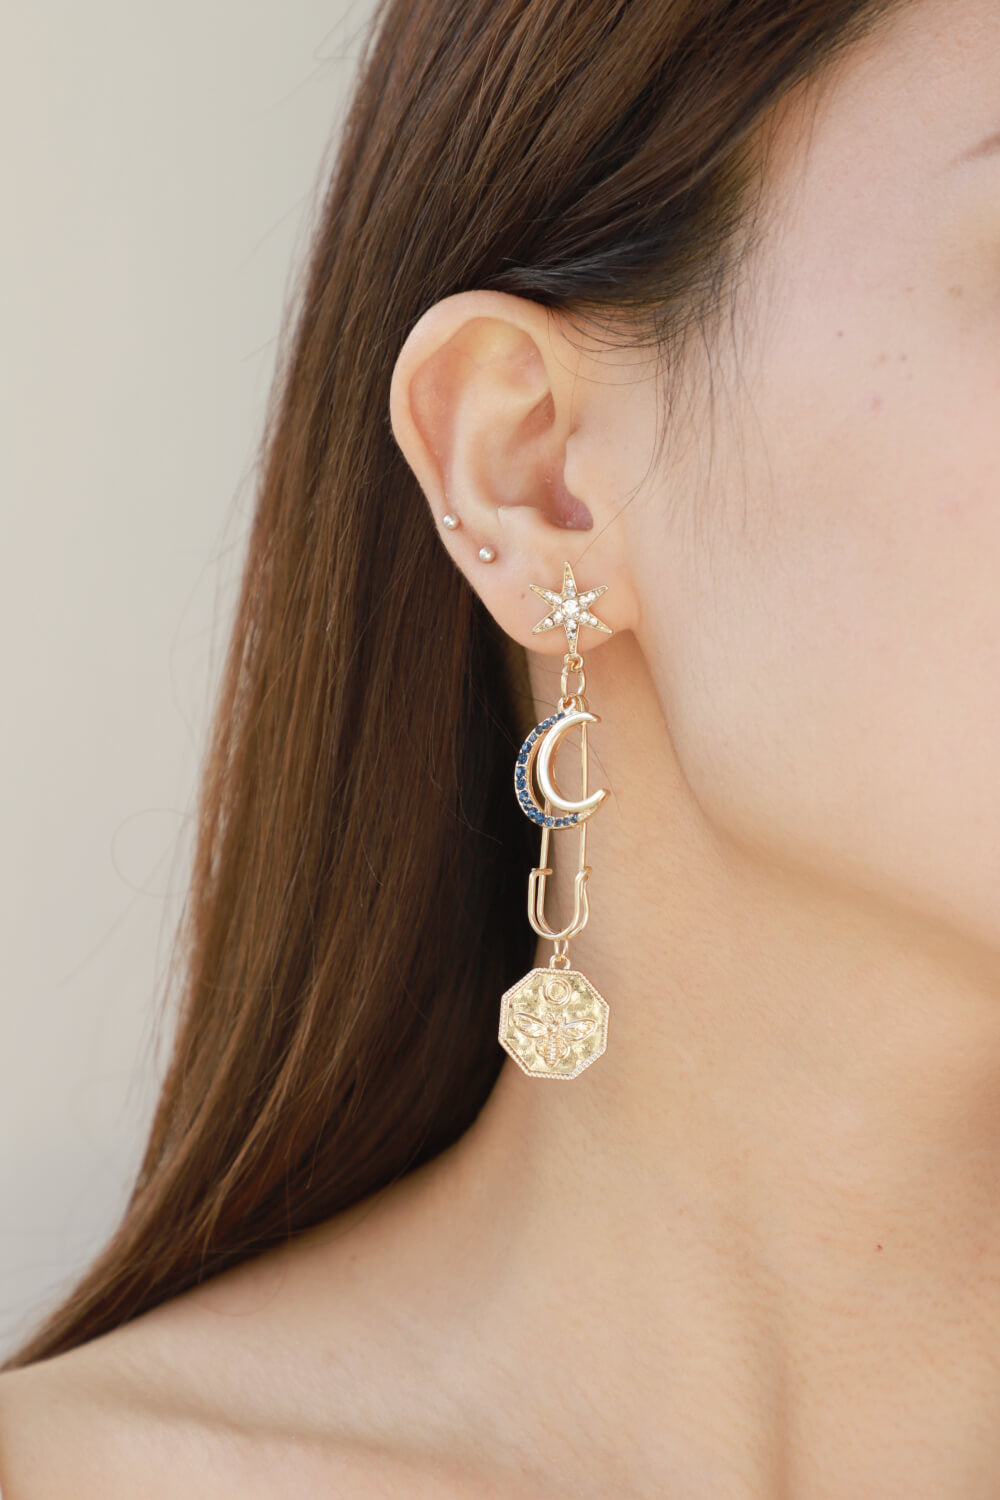 Rhinestone Moon and Star Drop Earrings